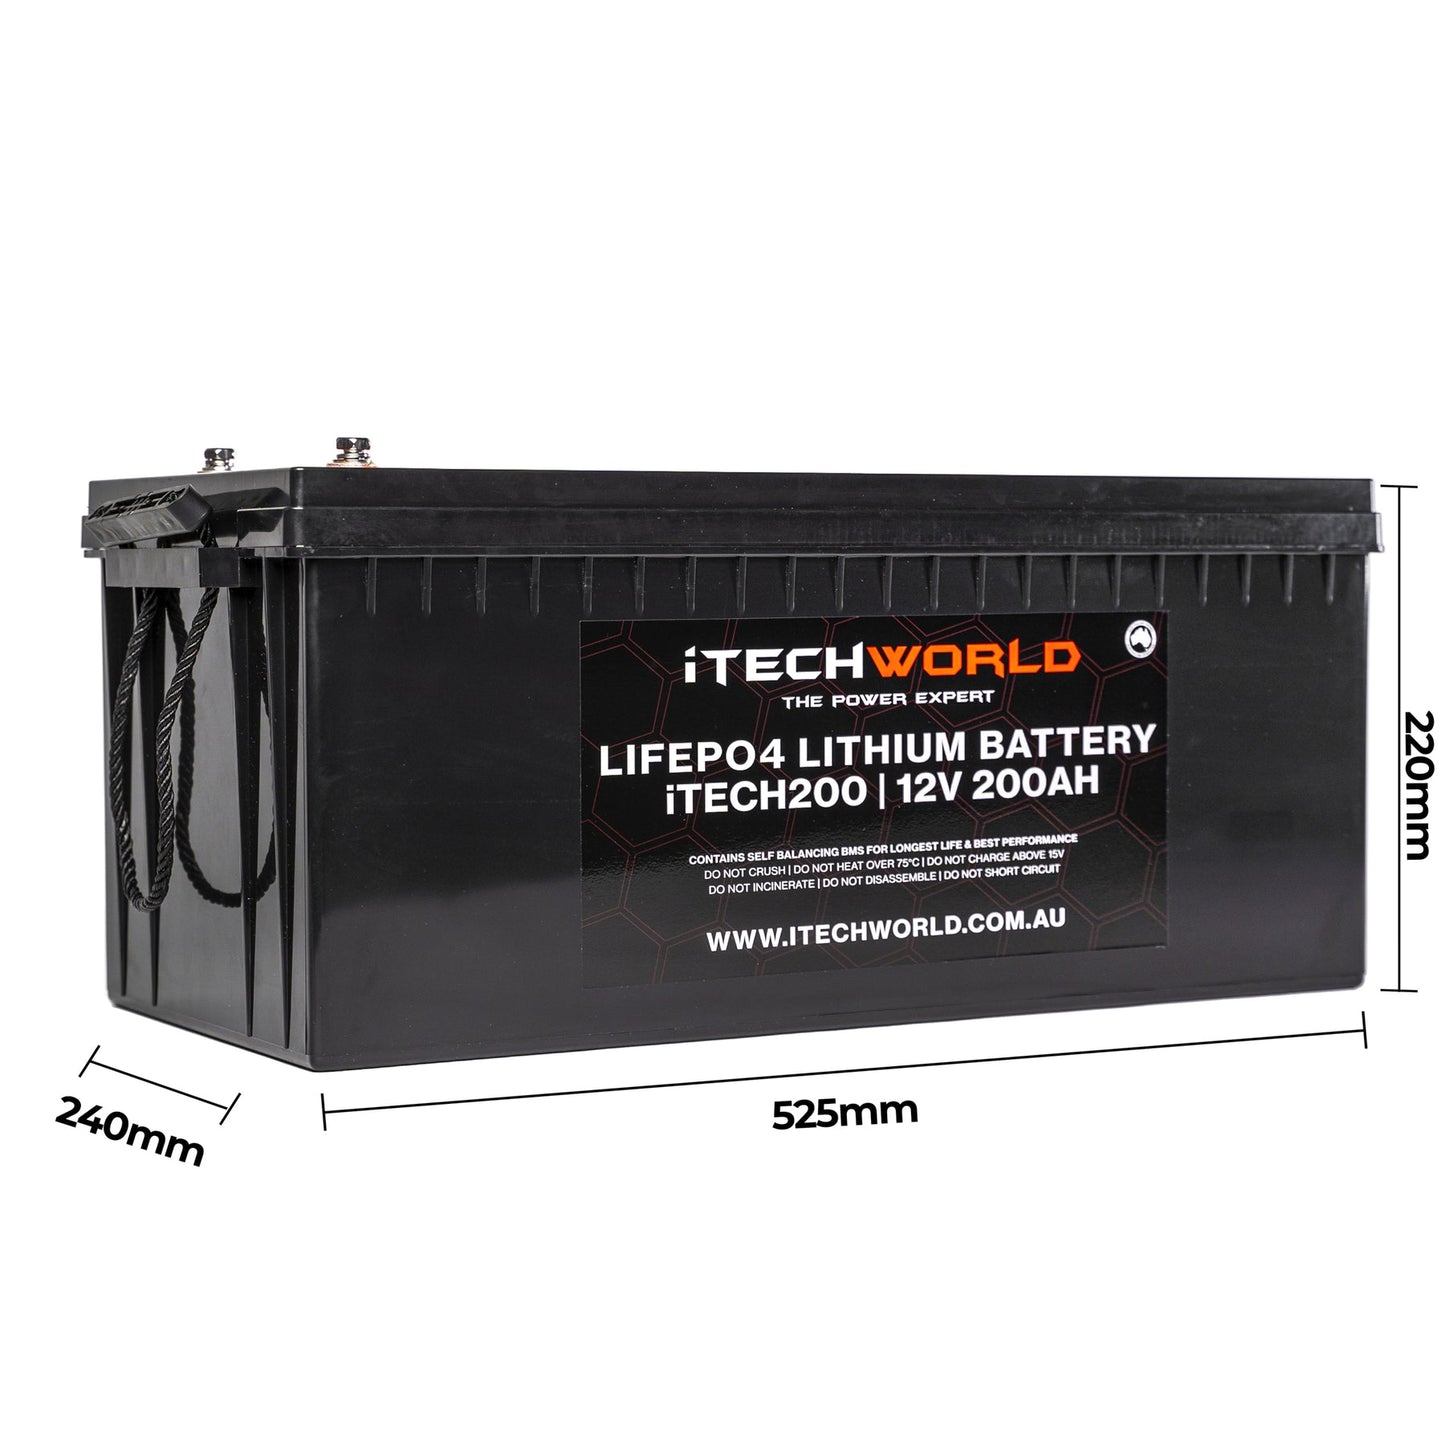 12V Itech200 200Ah Lithium Battery - Lifepo4 Deep Cycle Camping Rv Solar